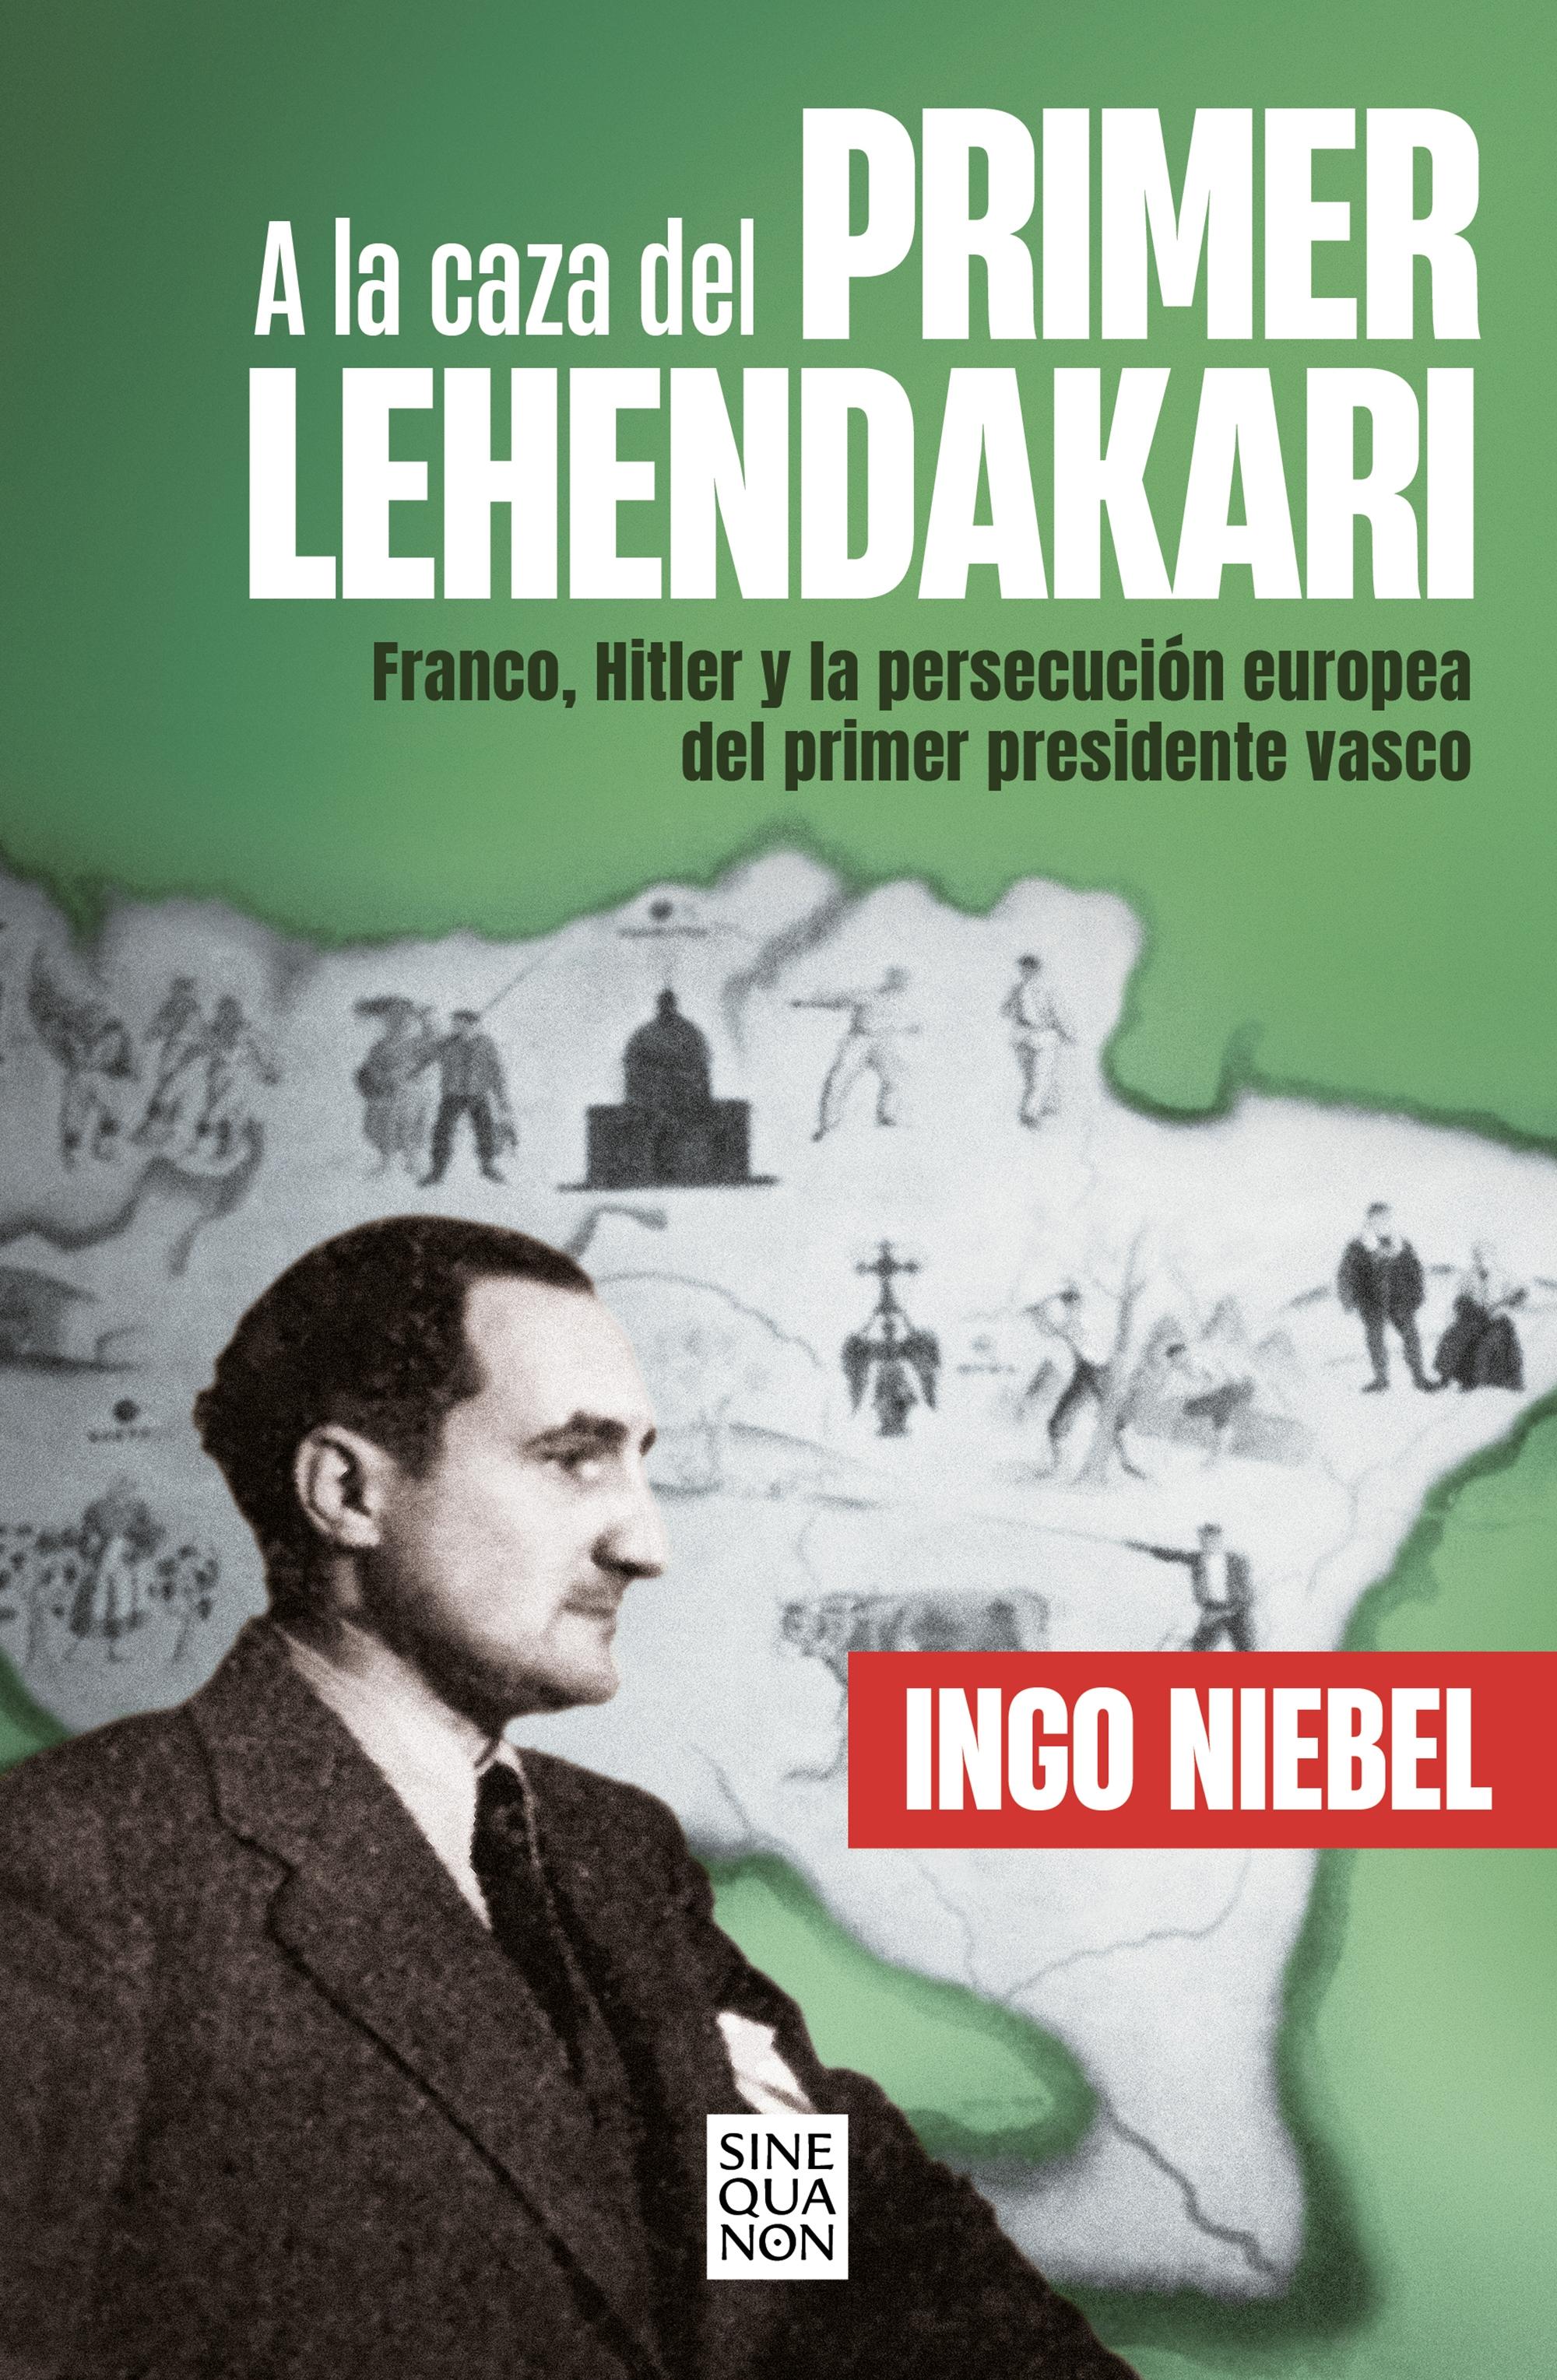 A la Caza del Primer Lehendakari "Franco, Hitler y la Persecucion del Primer Presidente Vasco"